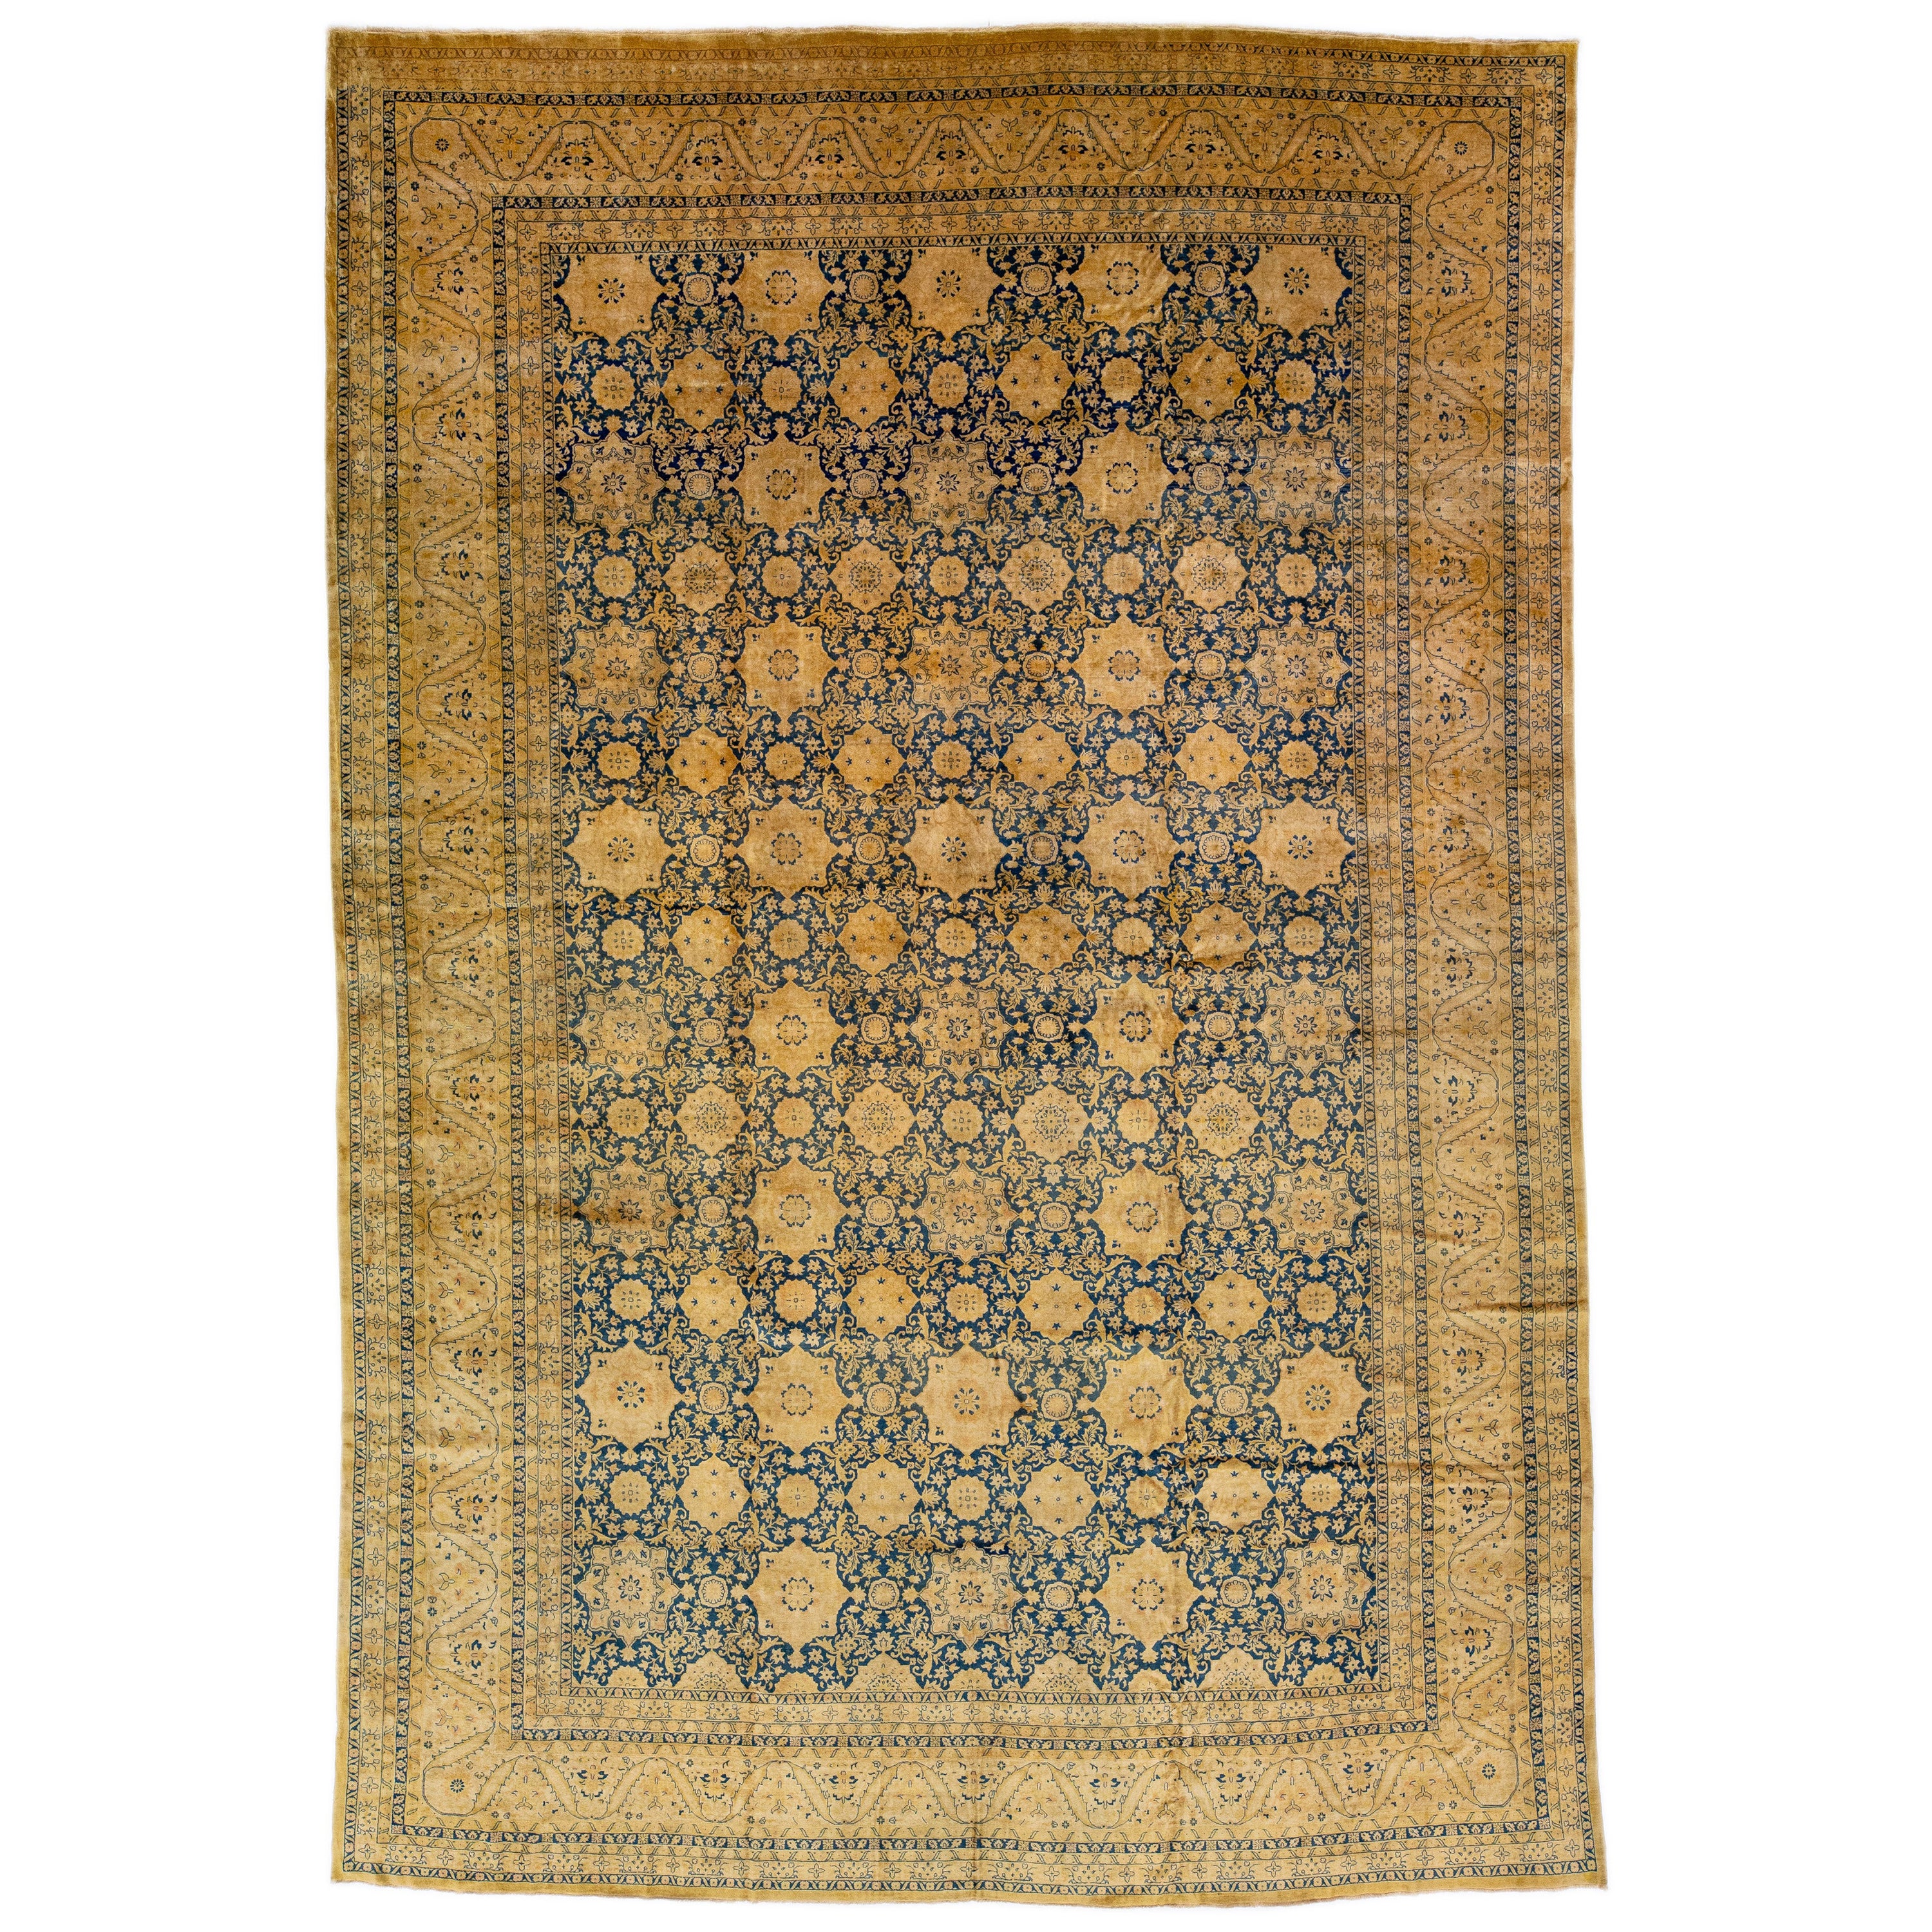 Antique Indian Handmade Blue Wool Rug with Allover Rosette Design